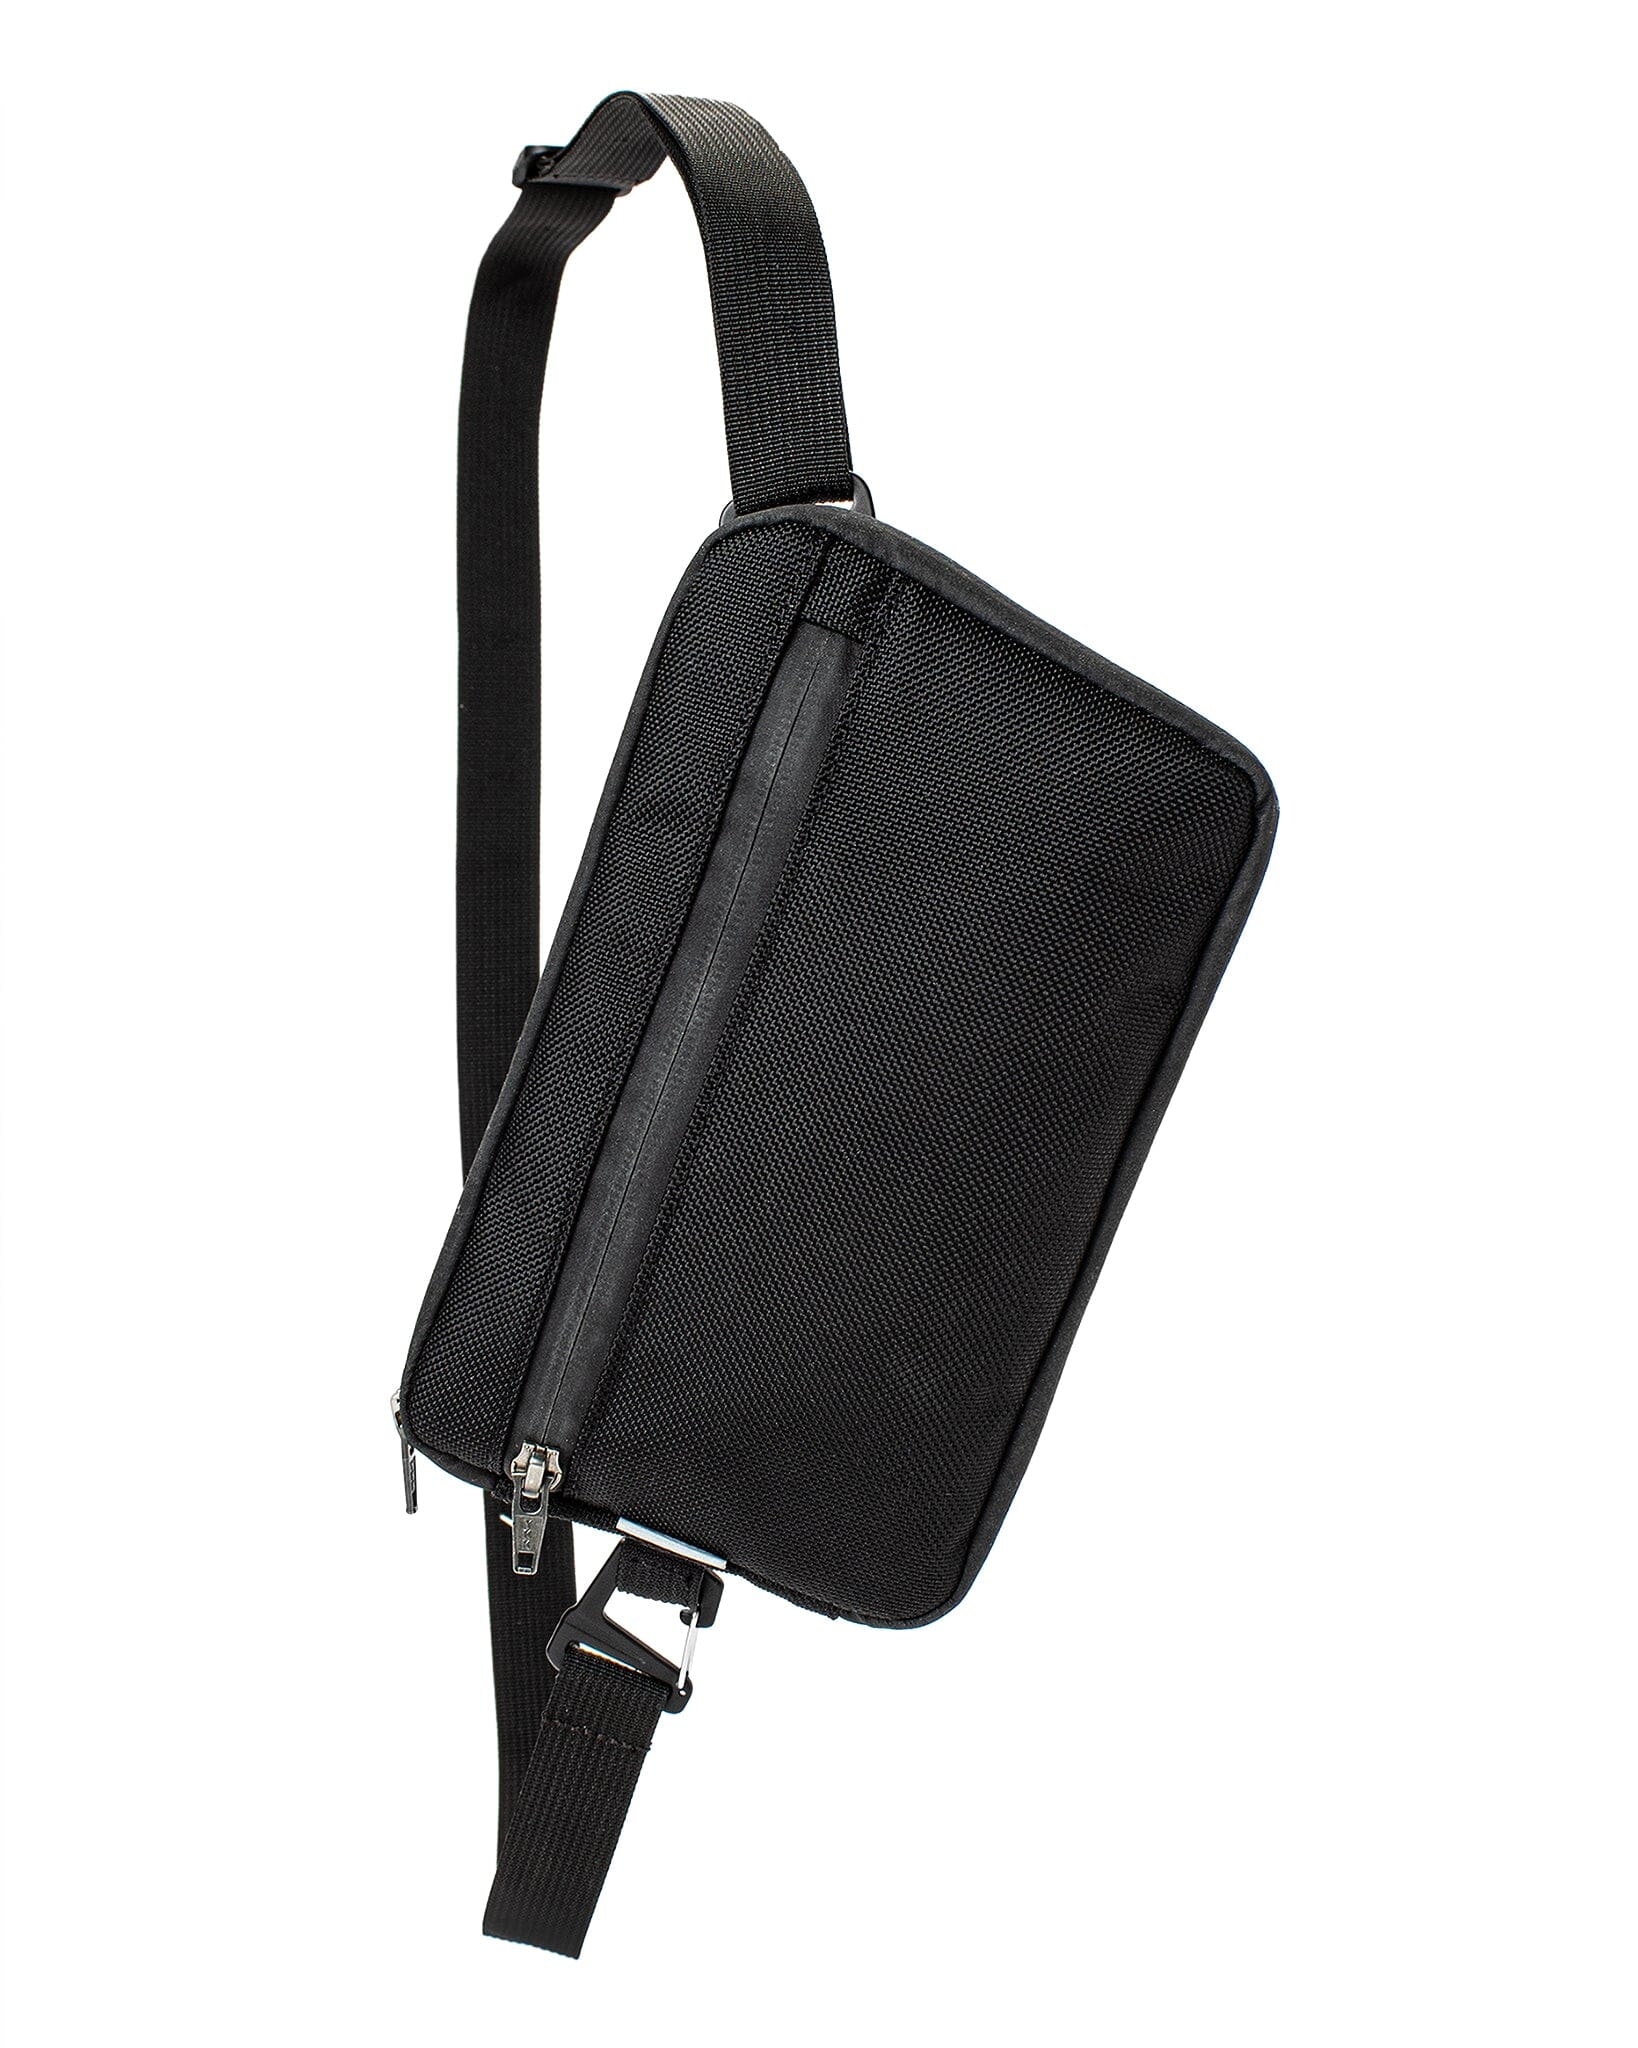 AUX™ Sling - Stealth Ballistic Bag bolstr   